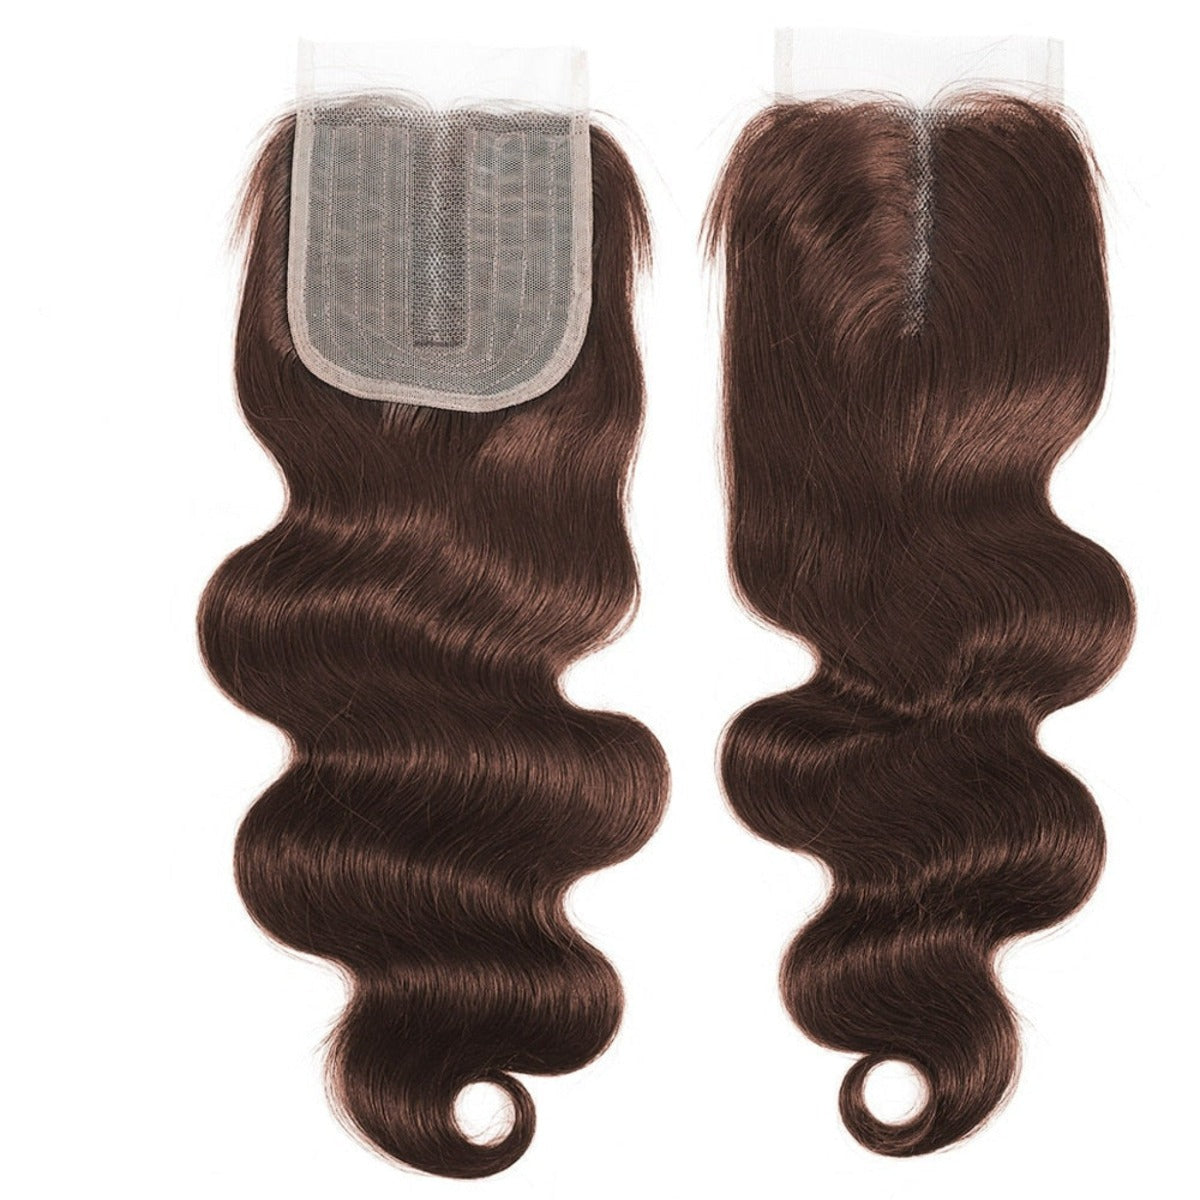 Body Wave Virgin Hair Bundles with Closure Caramel Brown